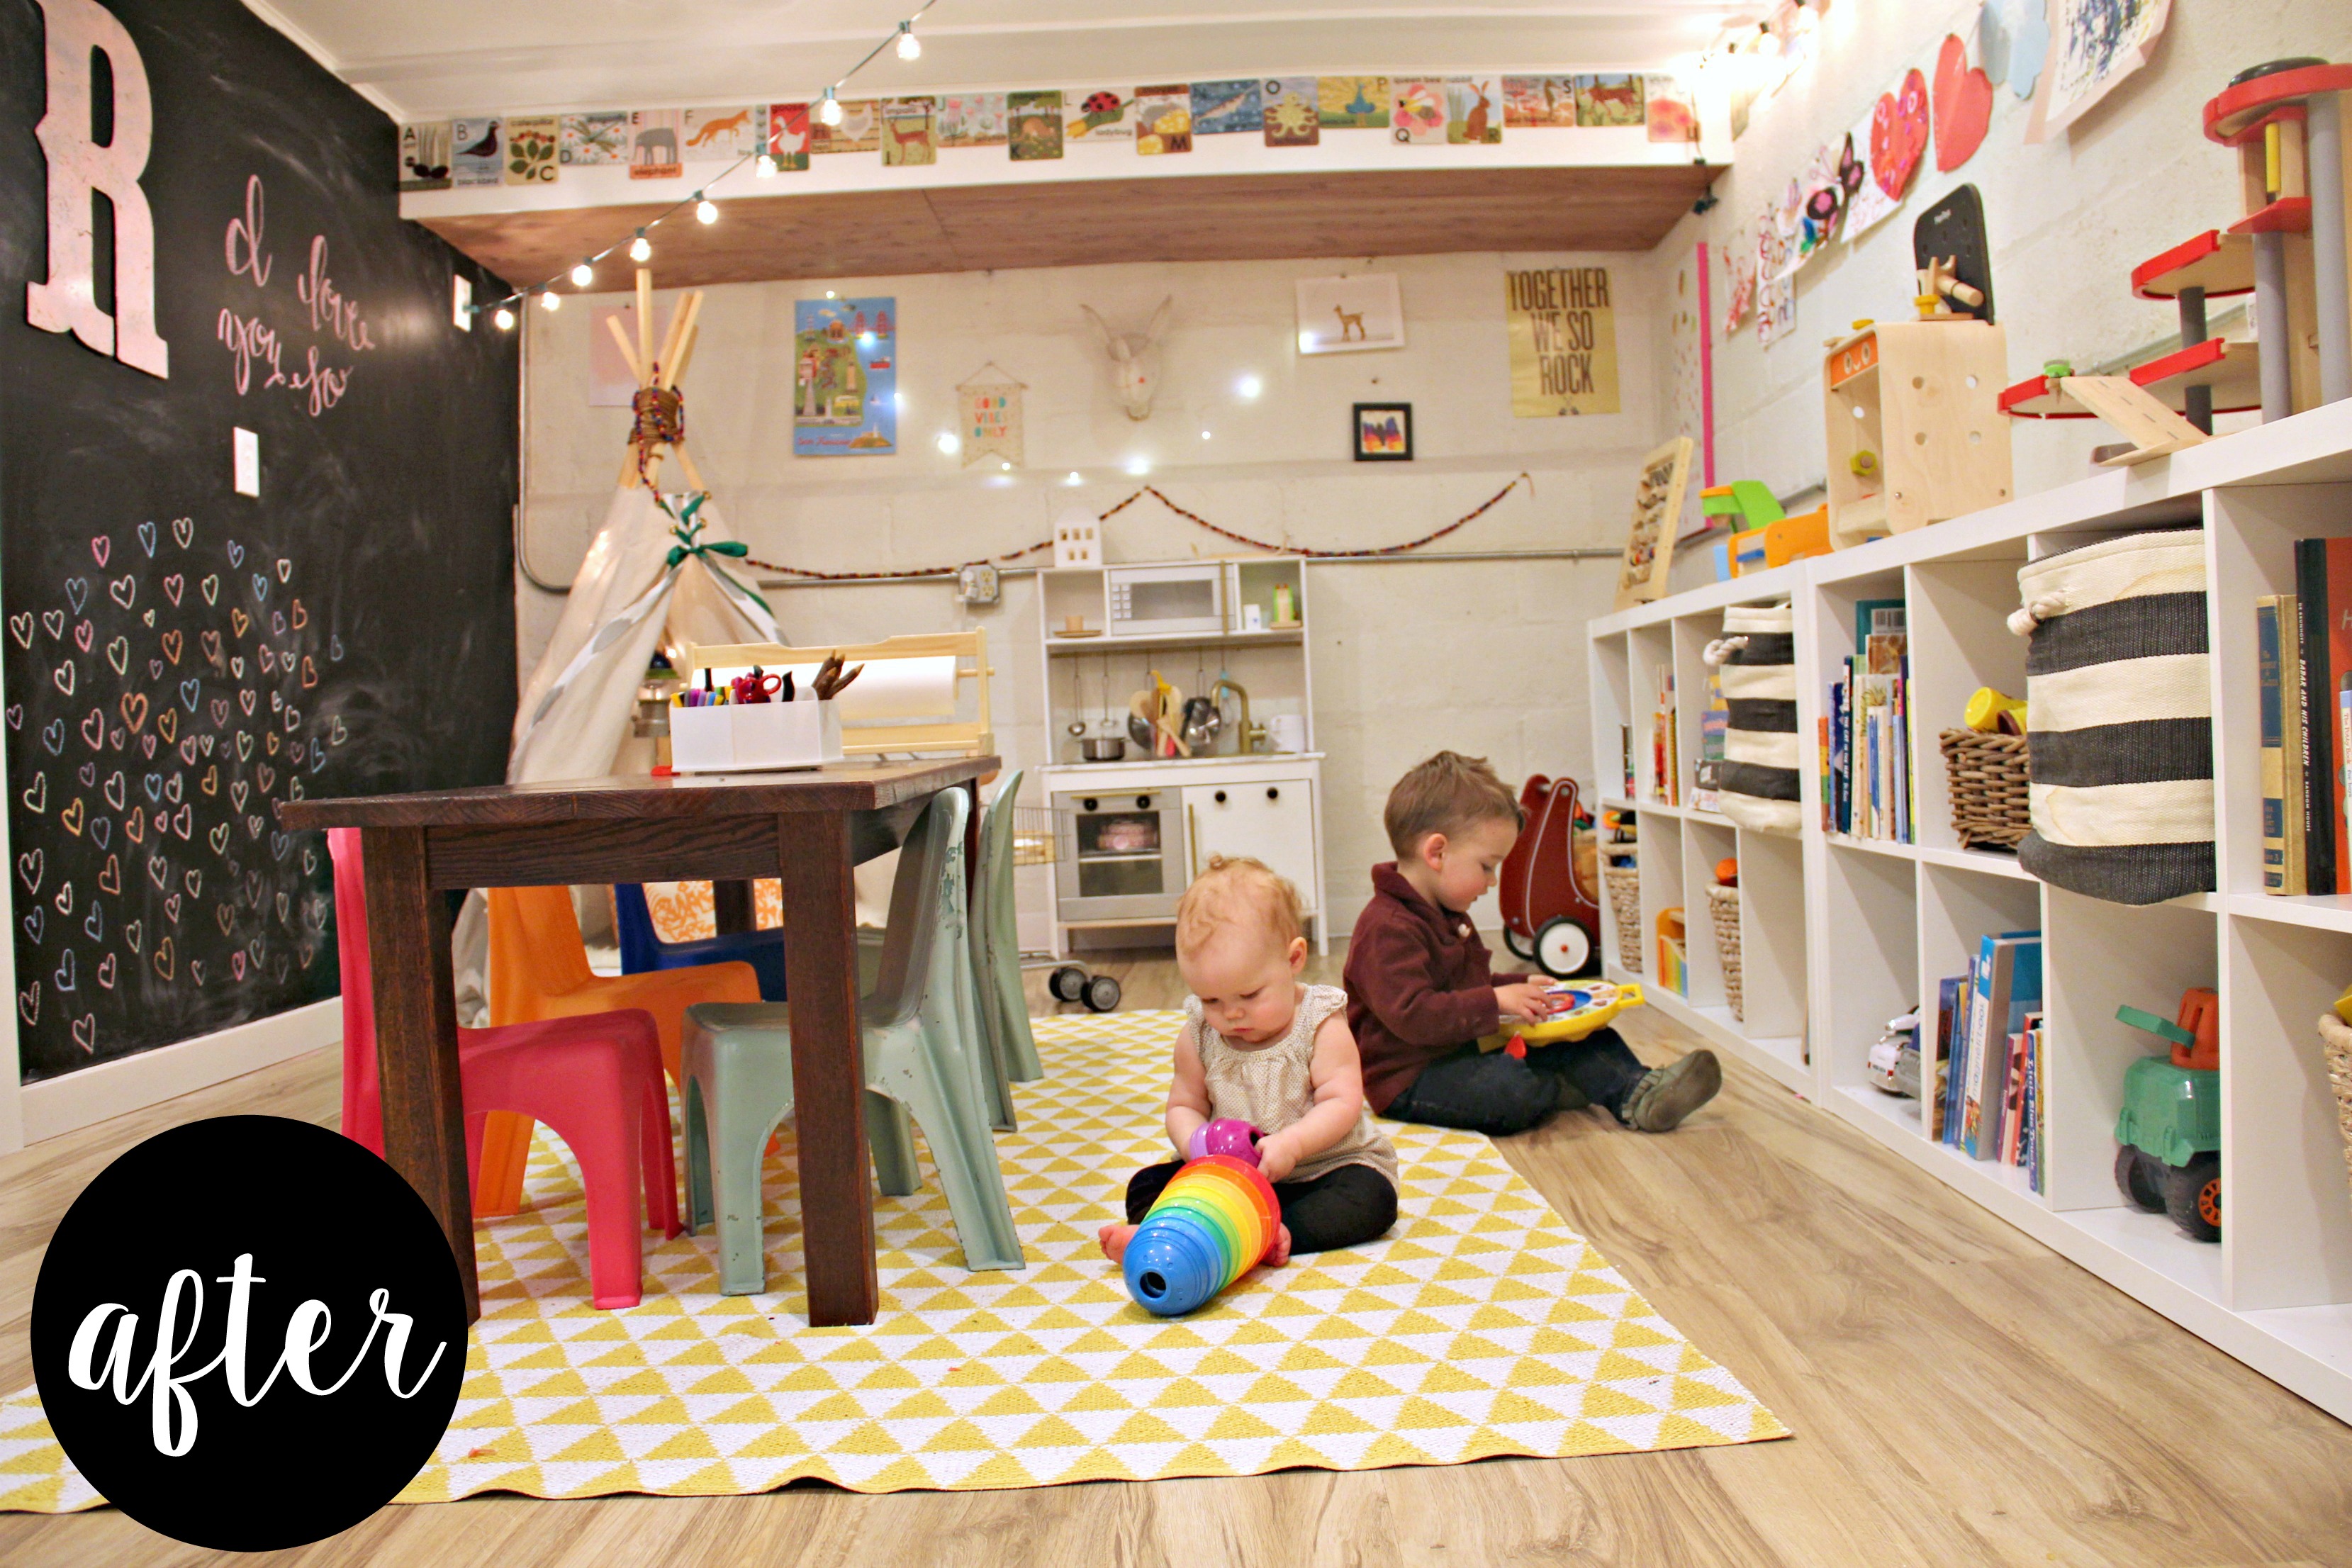 A Whimsical Basement Playroom - Project Nursery